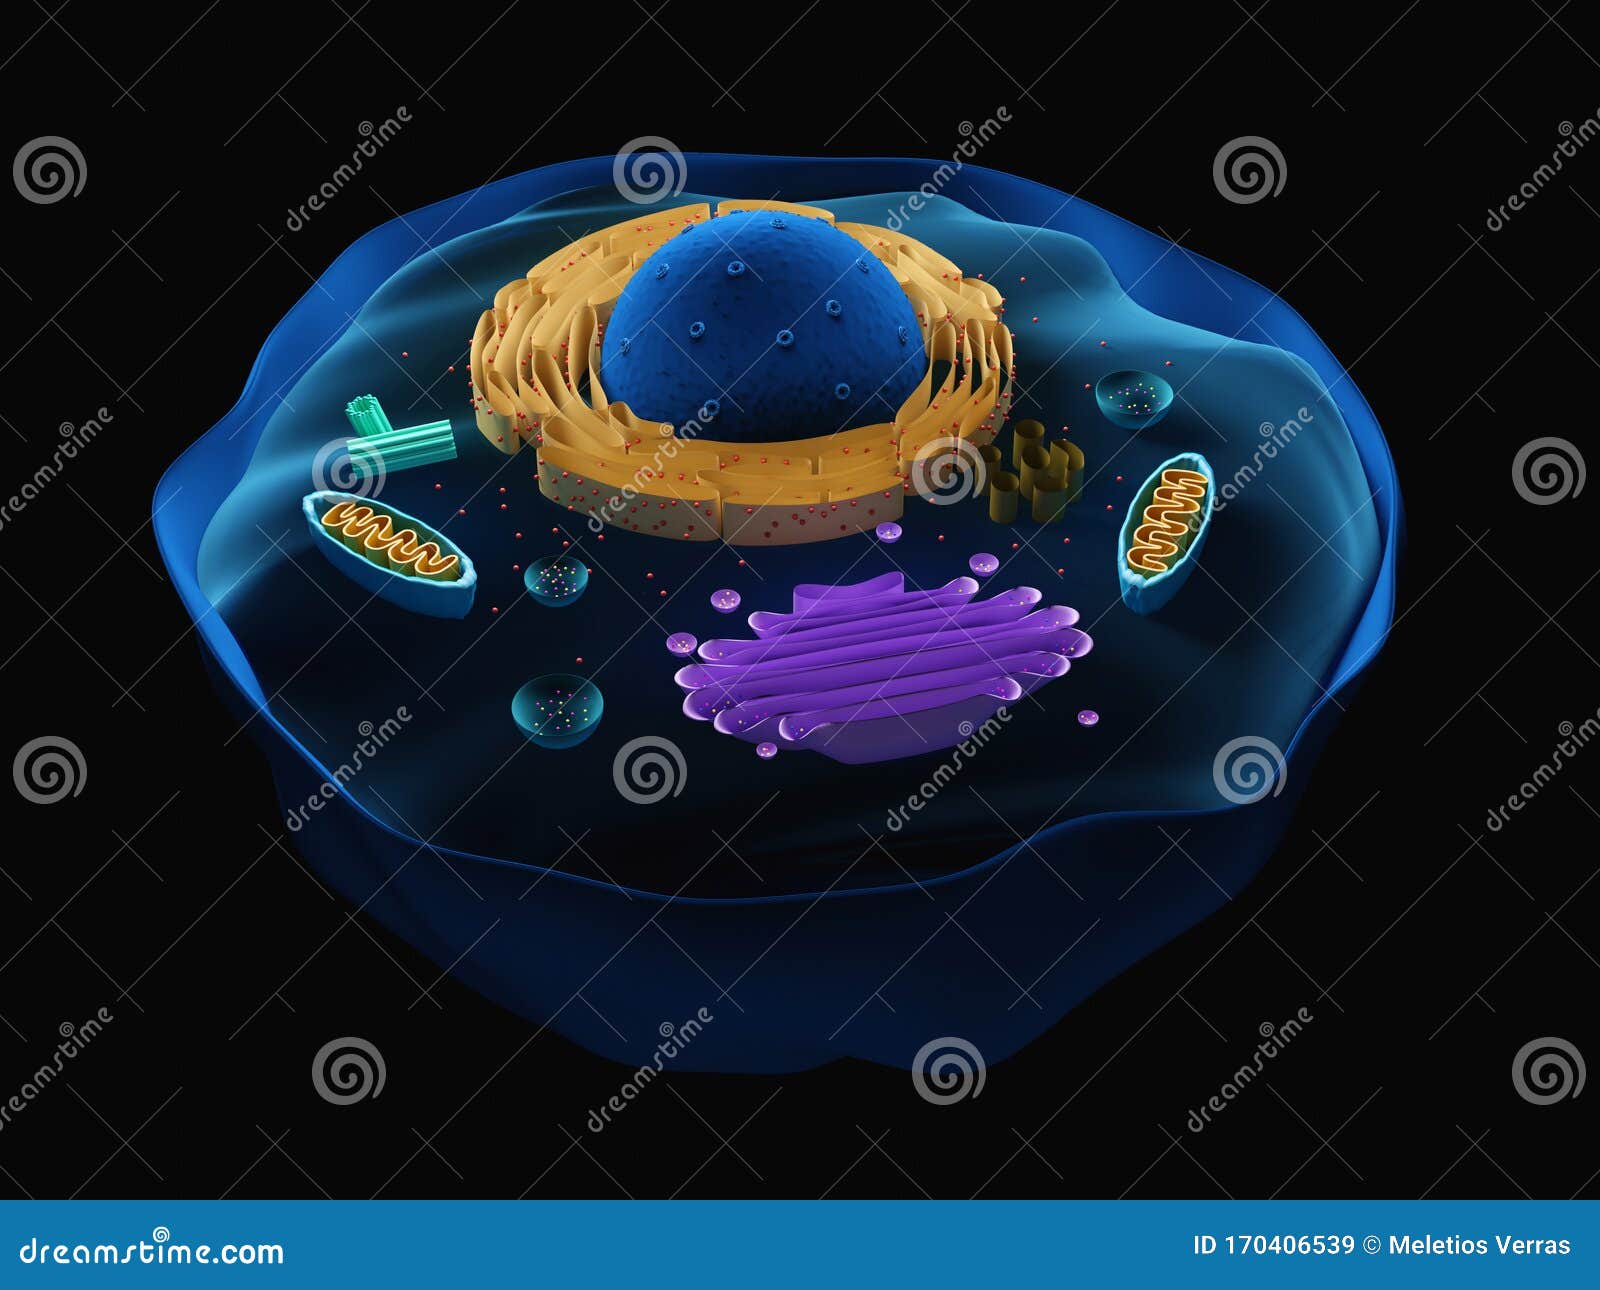 a eukaryotic cell